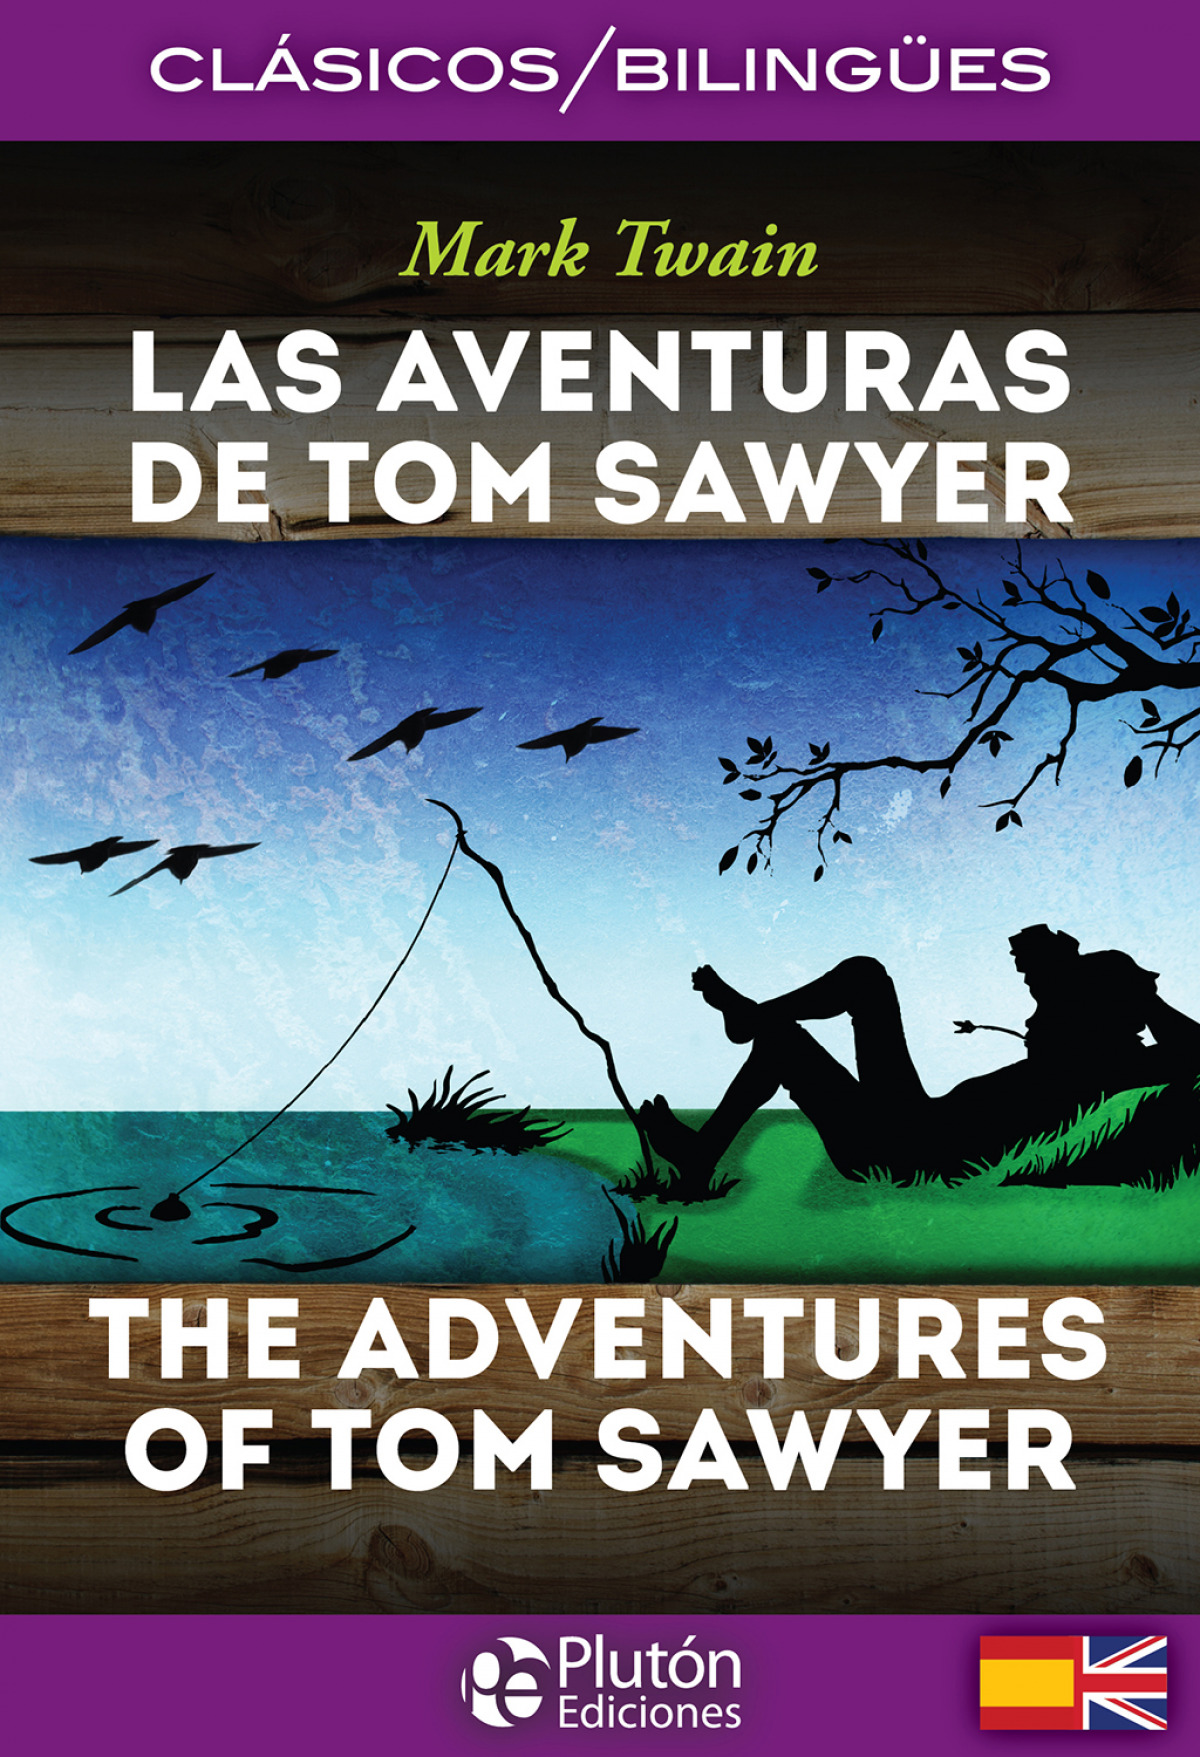 Las aventuras de tom sawyer - the adventures of tom sawyer - Mark Twain